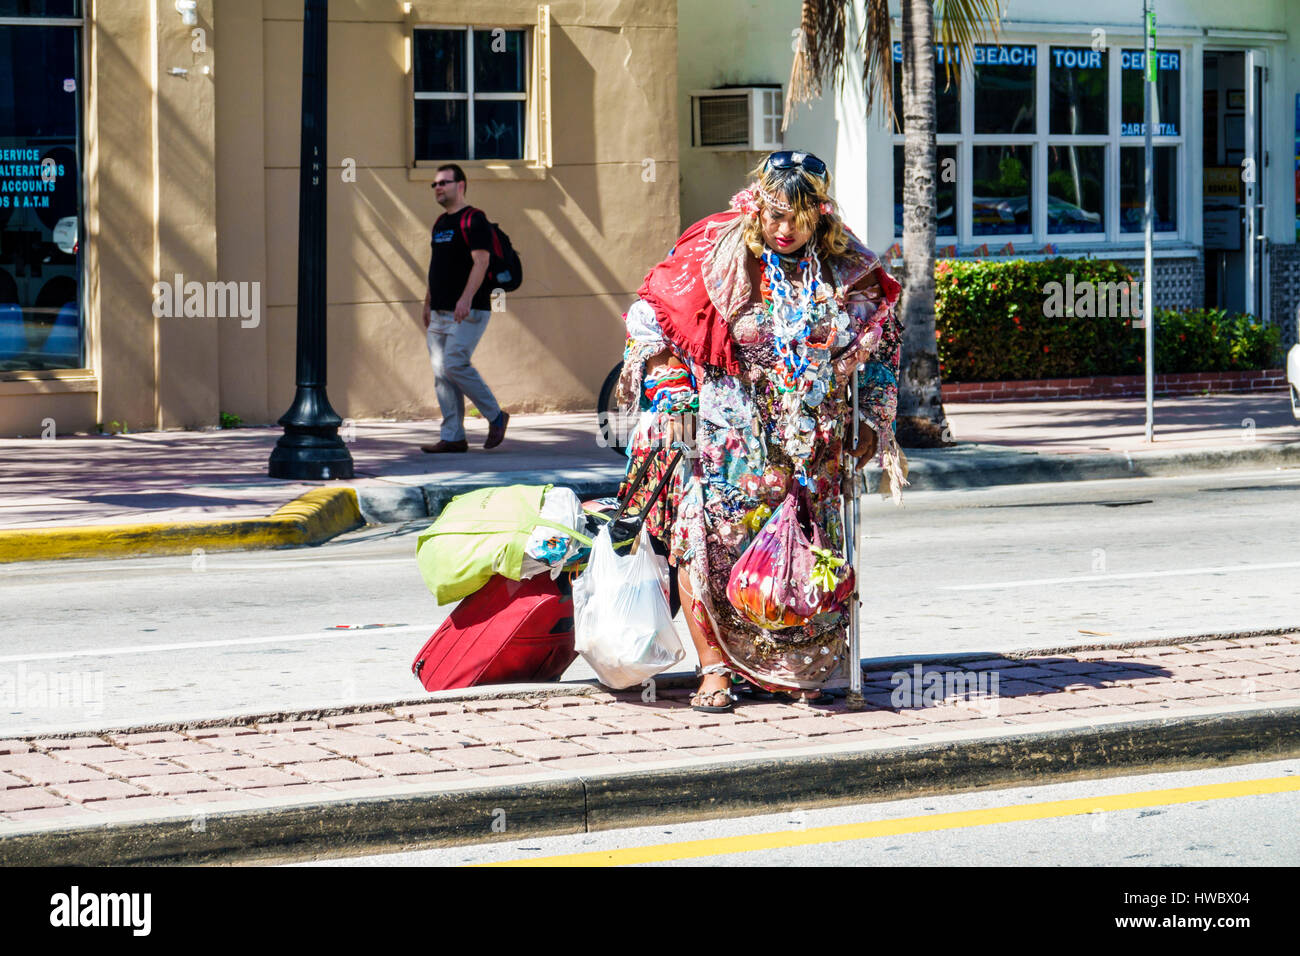 Miami Beach Florida,Washington Avenue,woman female women,bag lady,young adult,homeless,indigent,street person,eccentric,rolling luggage,FL170205004 Stock Photo